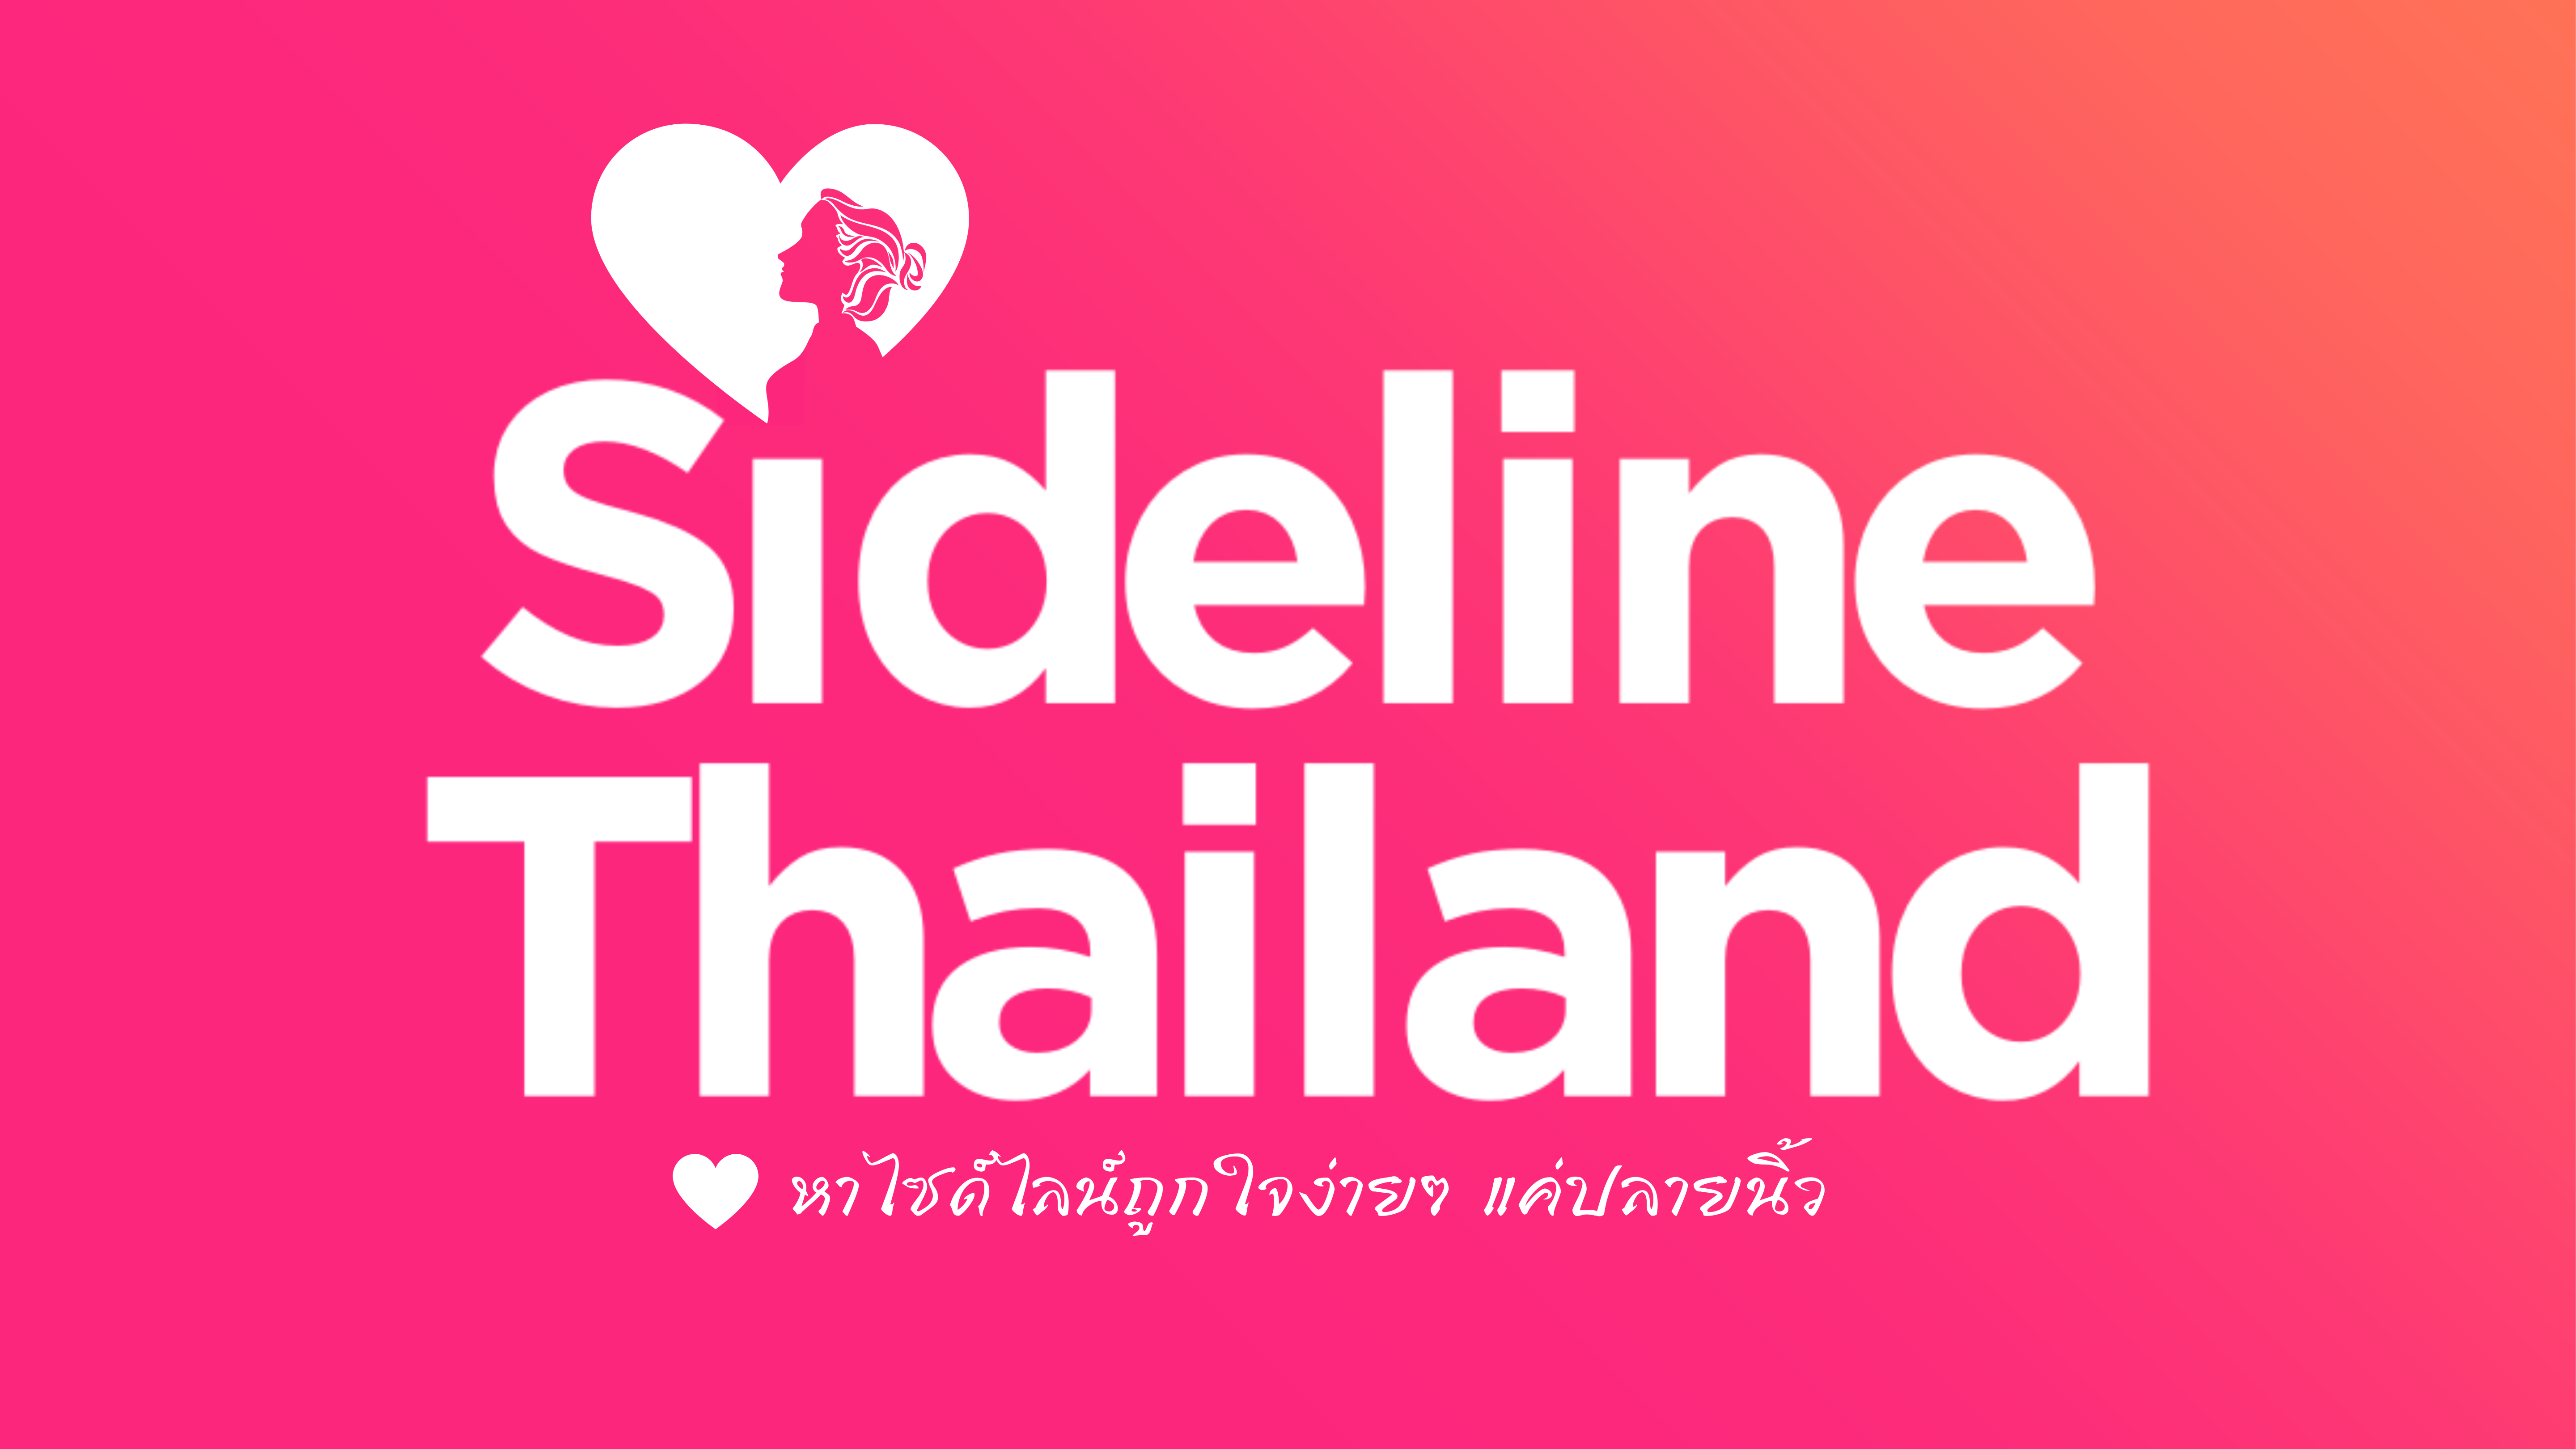 www.sidelinethailand.com